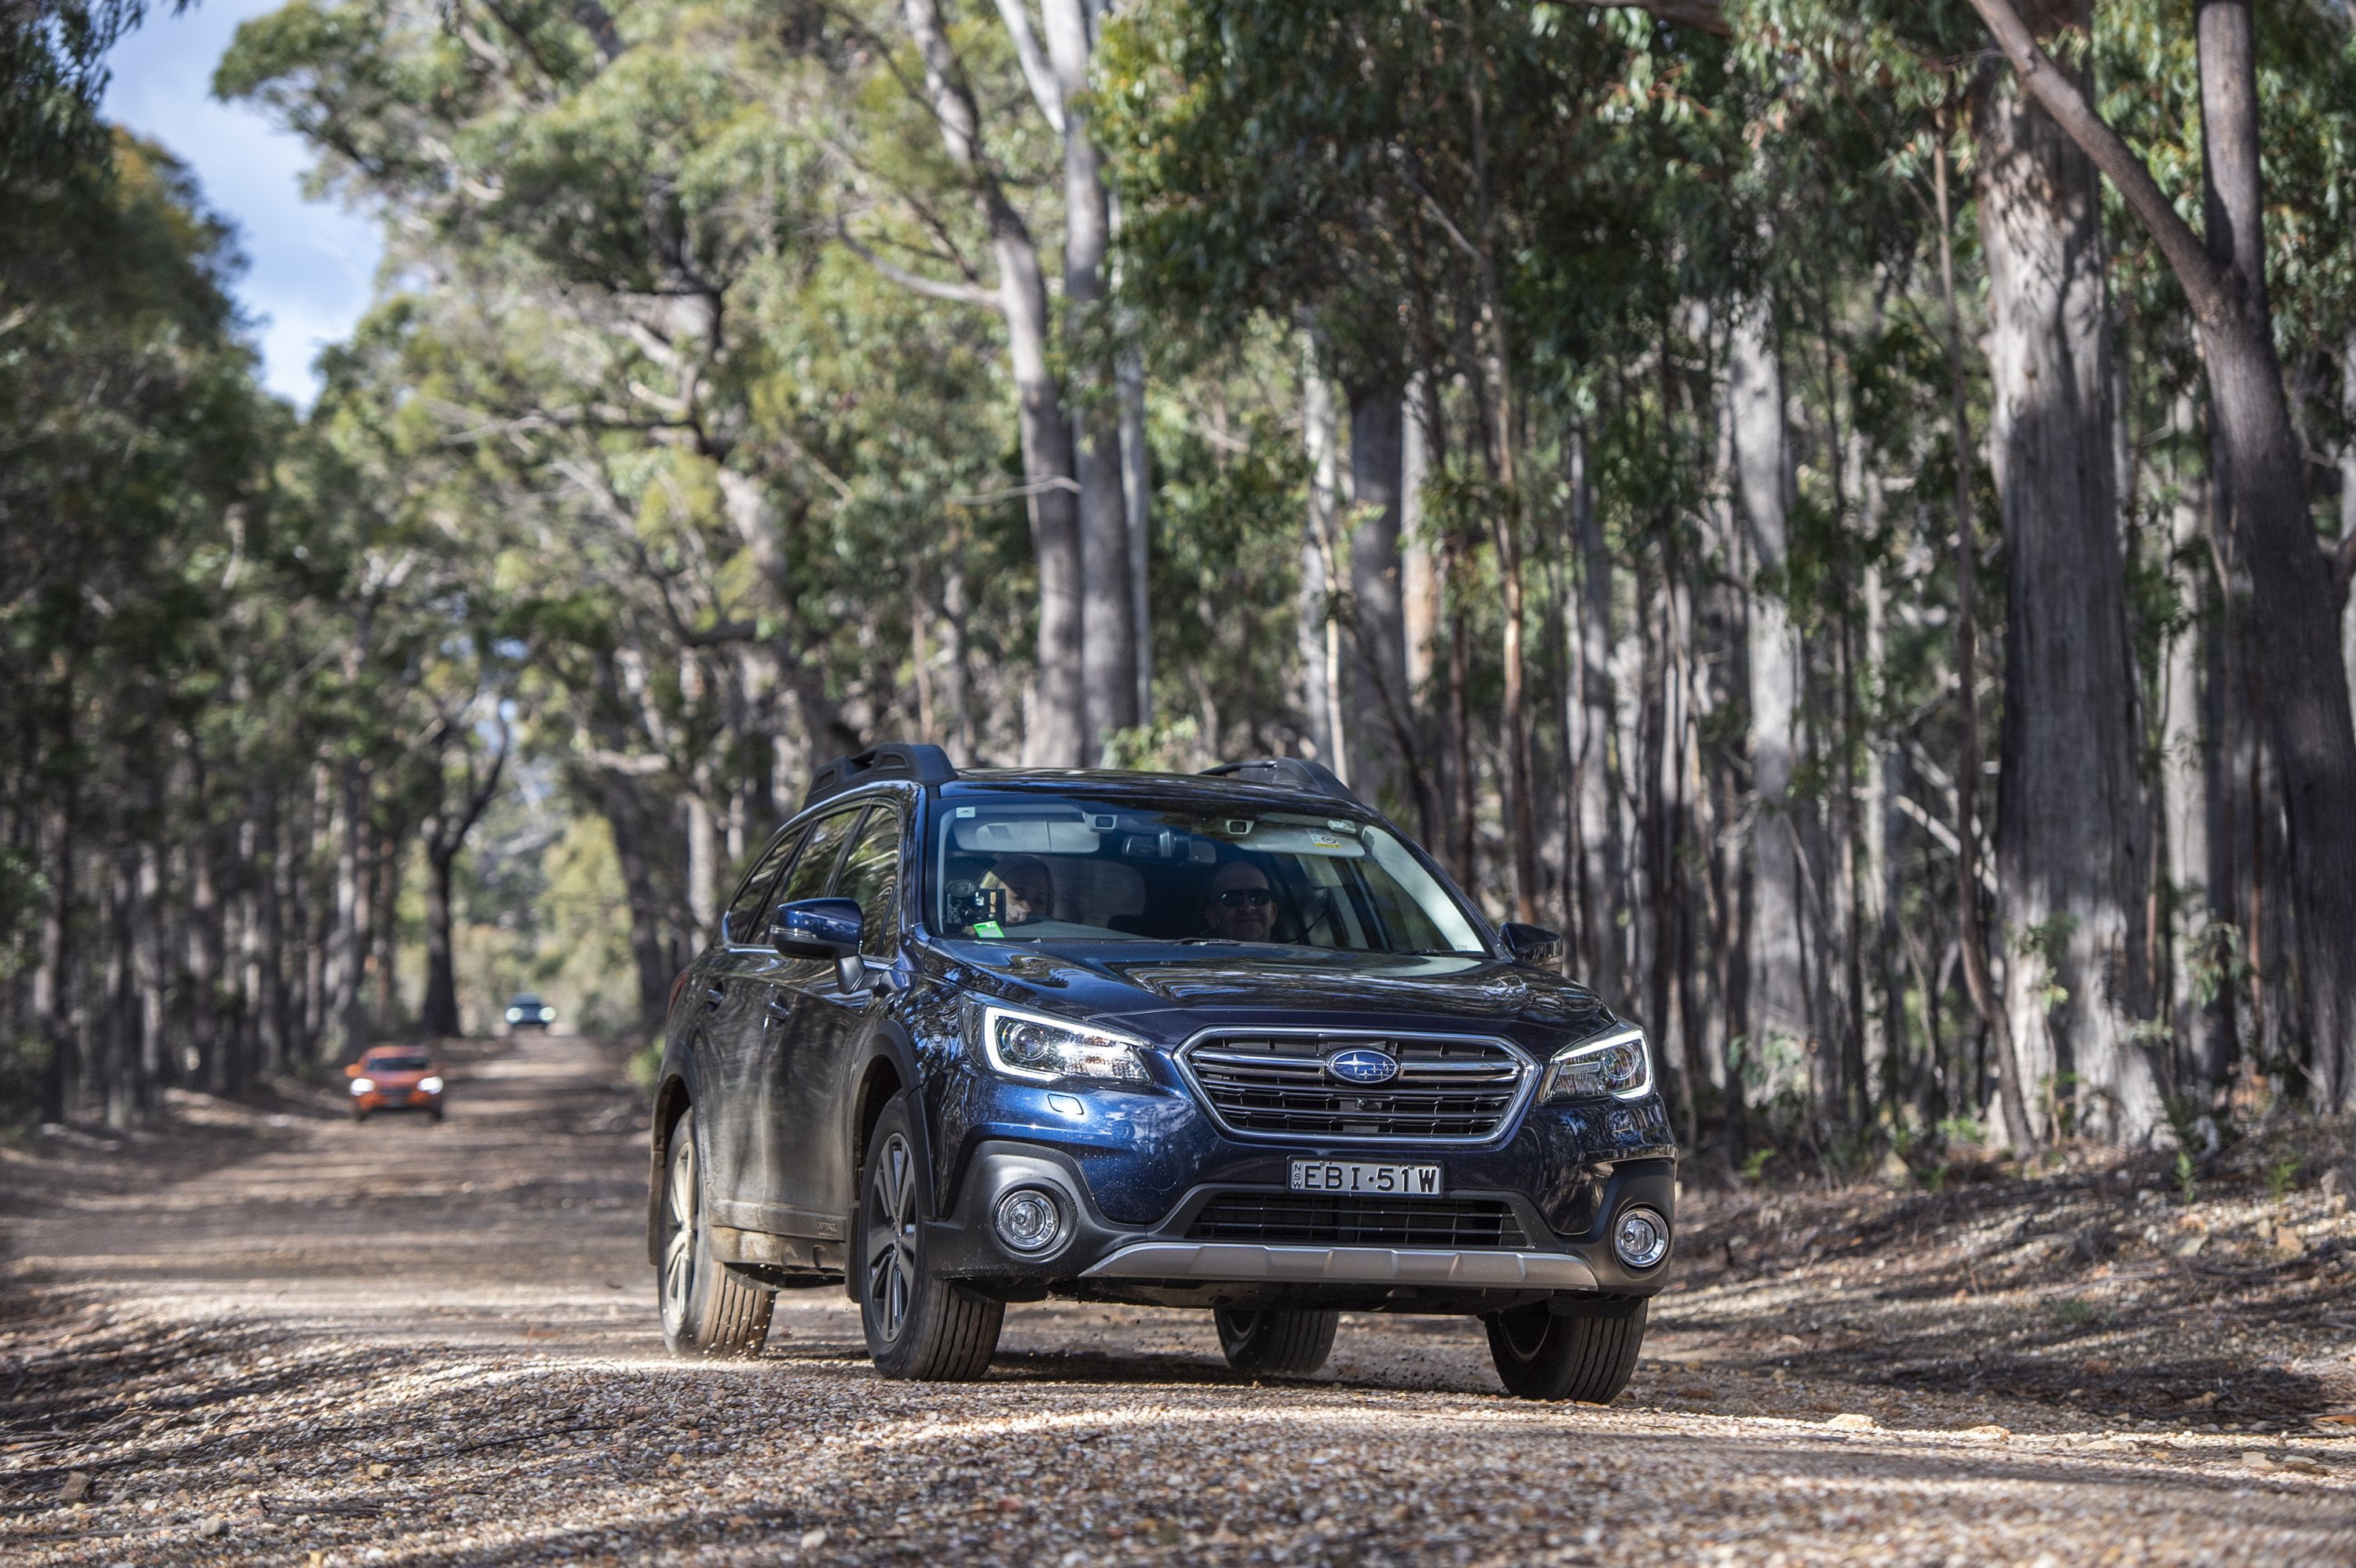 2019 Subaru Tasmania SUV Experience, June 19-21. Featuring Subaru Forester, Outback and  XV vehicles. (Photo Narrative Post/Matthias Engesser)